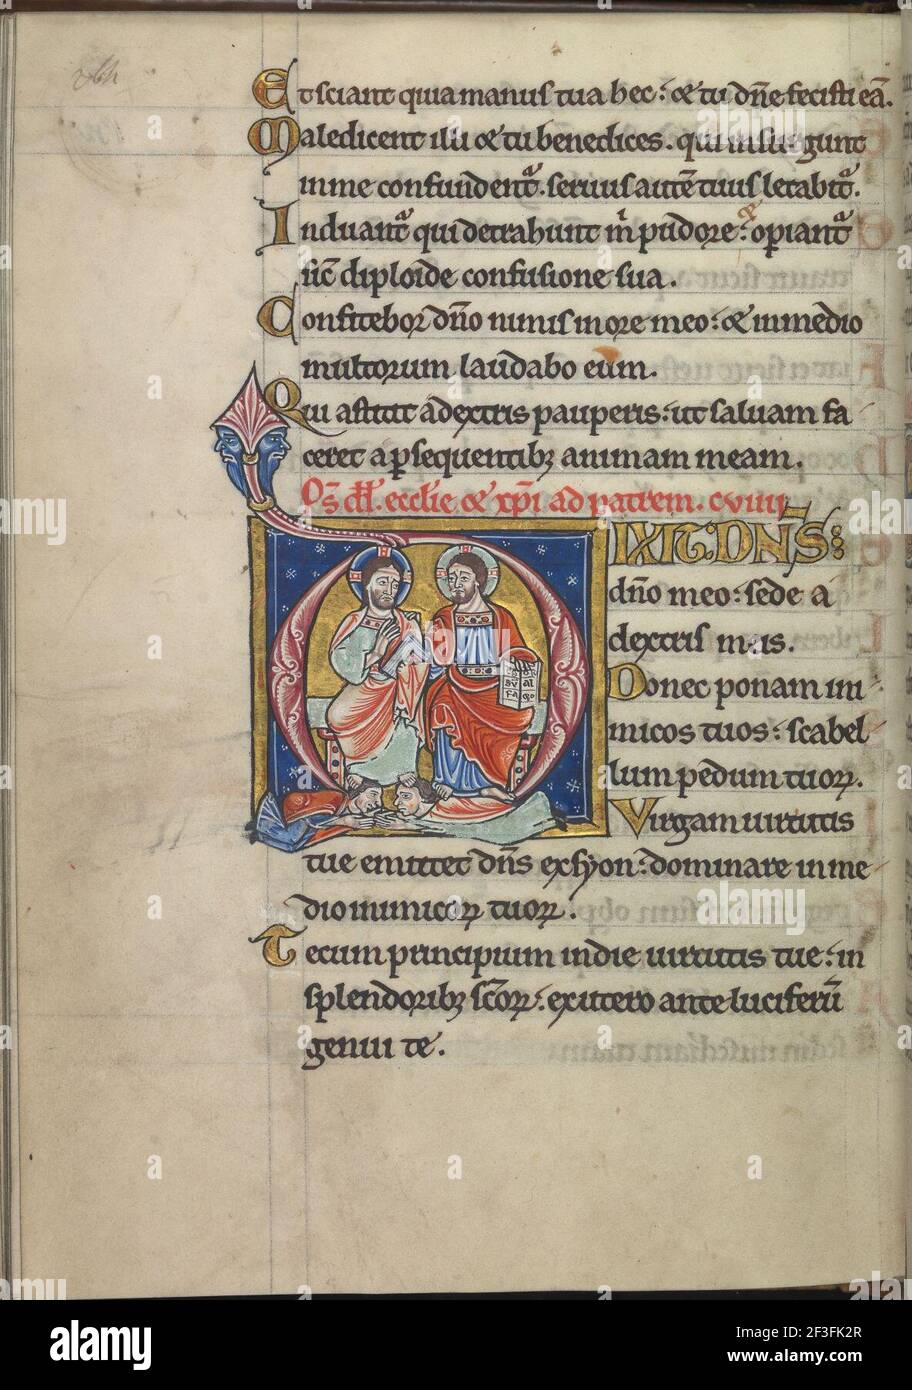 Psalm 109, Dixit dominus dominus meo, sede a dextris meis, Christus und Gott - Psalter von Eleanor von Aquitanien (ca. 1185) - KB 76 F 13, Folium 132v. Stockfoto